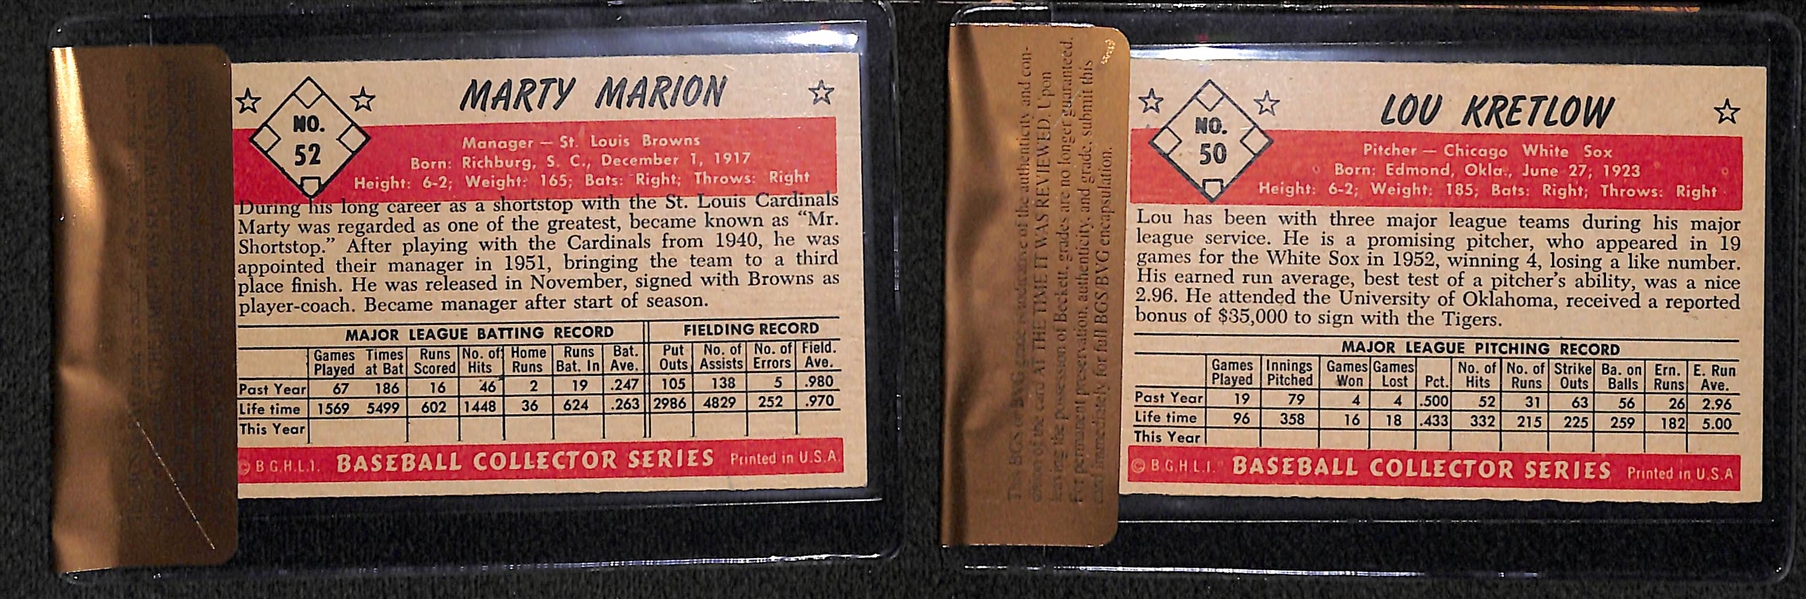 1953 Bowman Color High Grade (NM) Lot: Marion (#52) BVG 8.0; Kretlow (#50) BVG 8.0